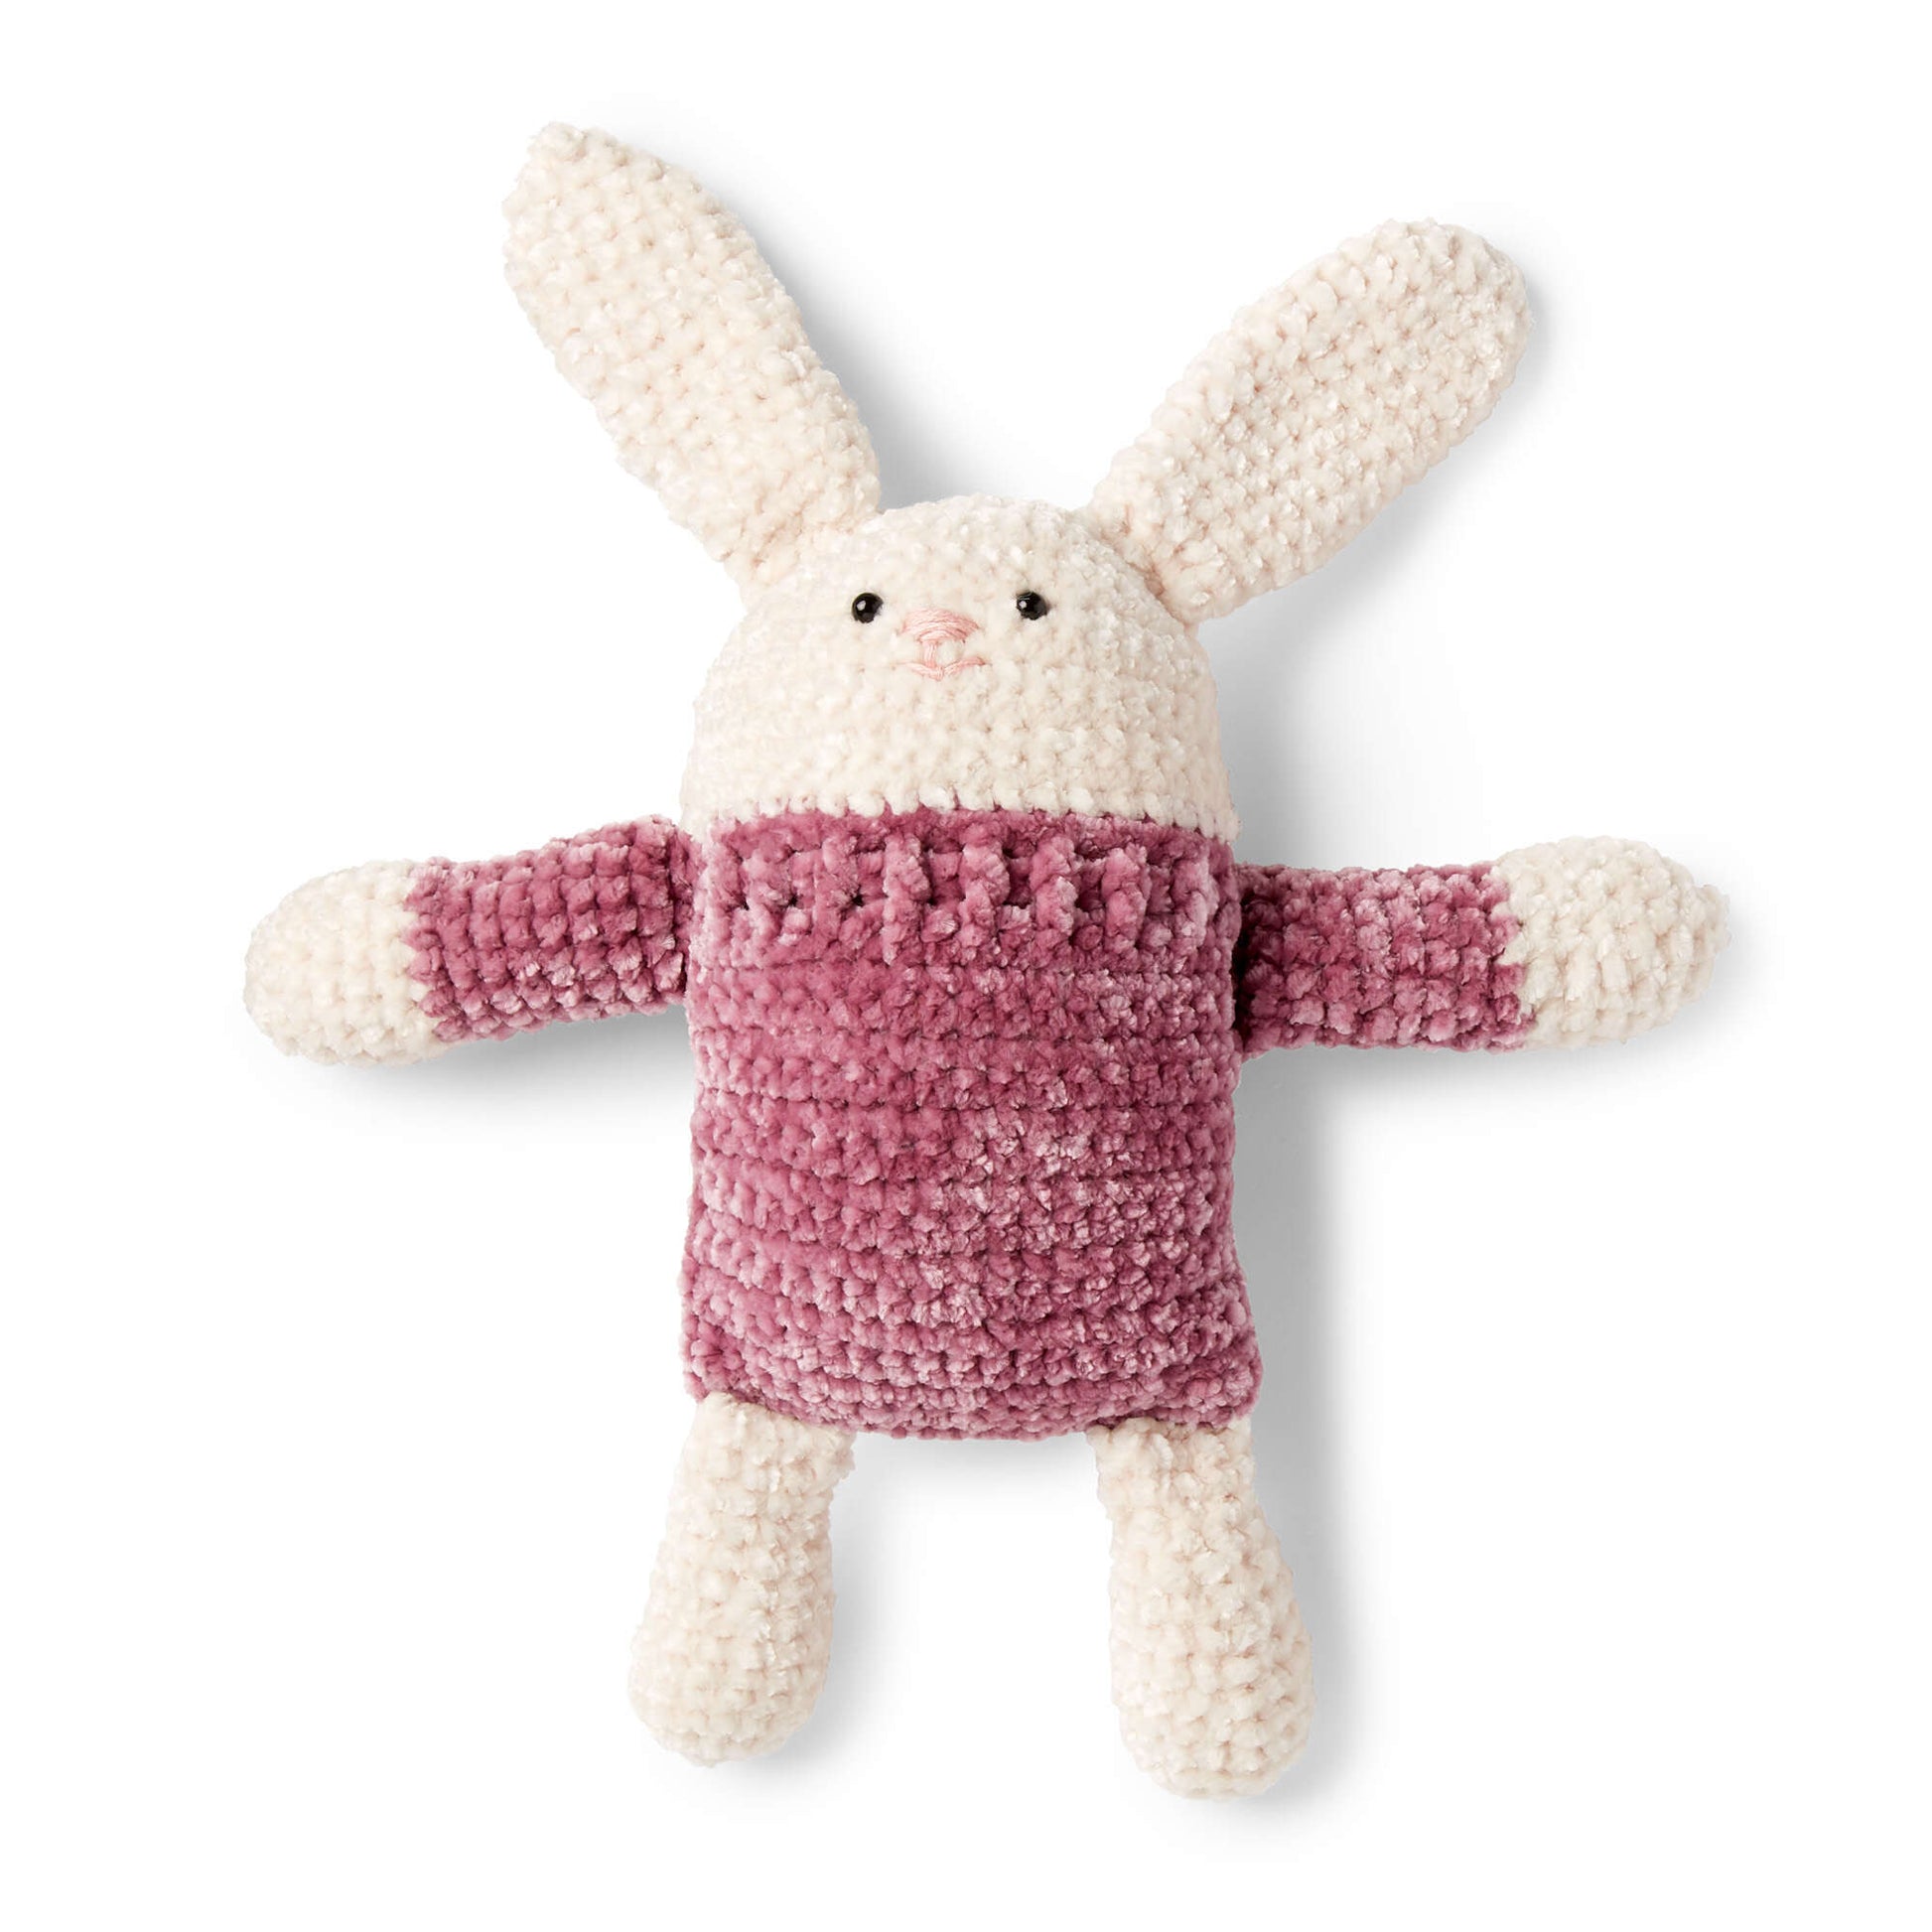 Free Bernat Square Hare To Crochet Pattern